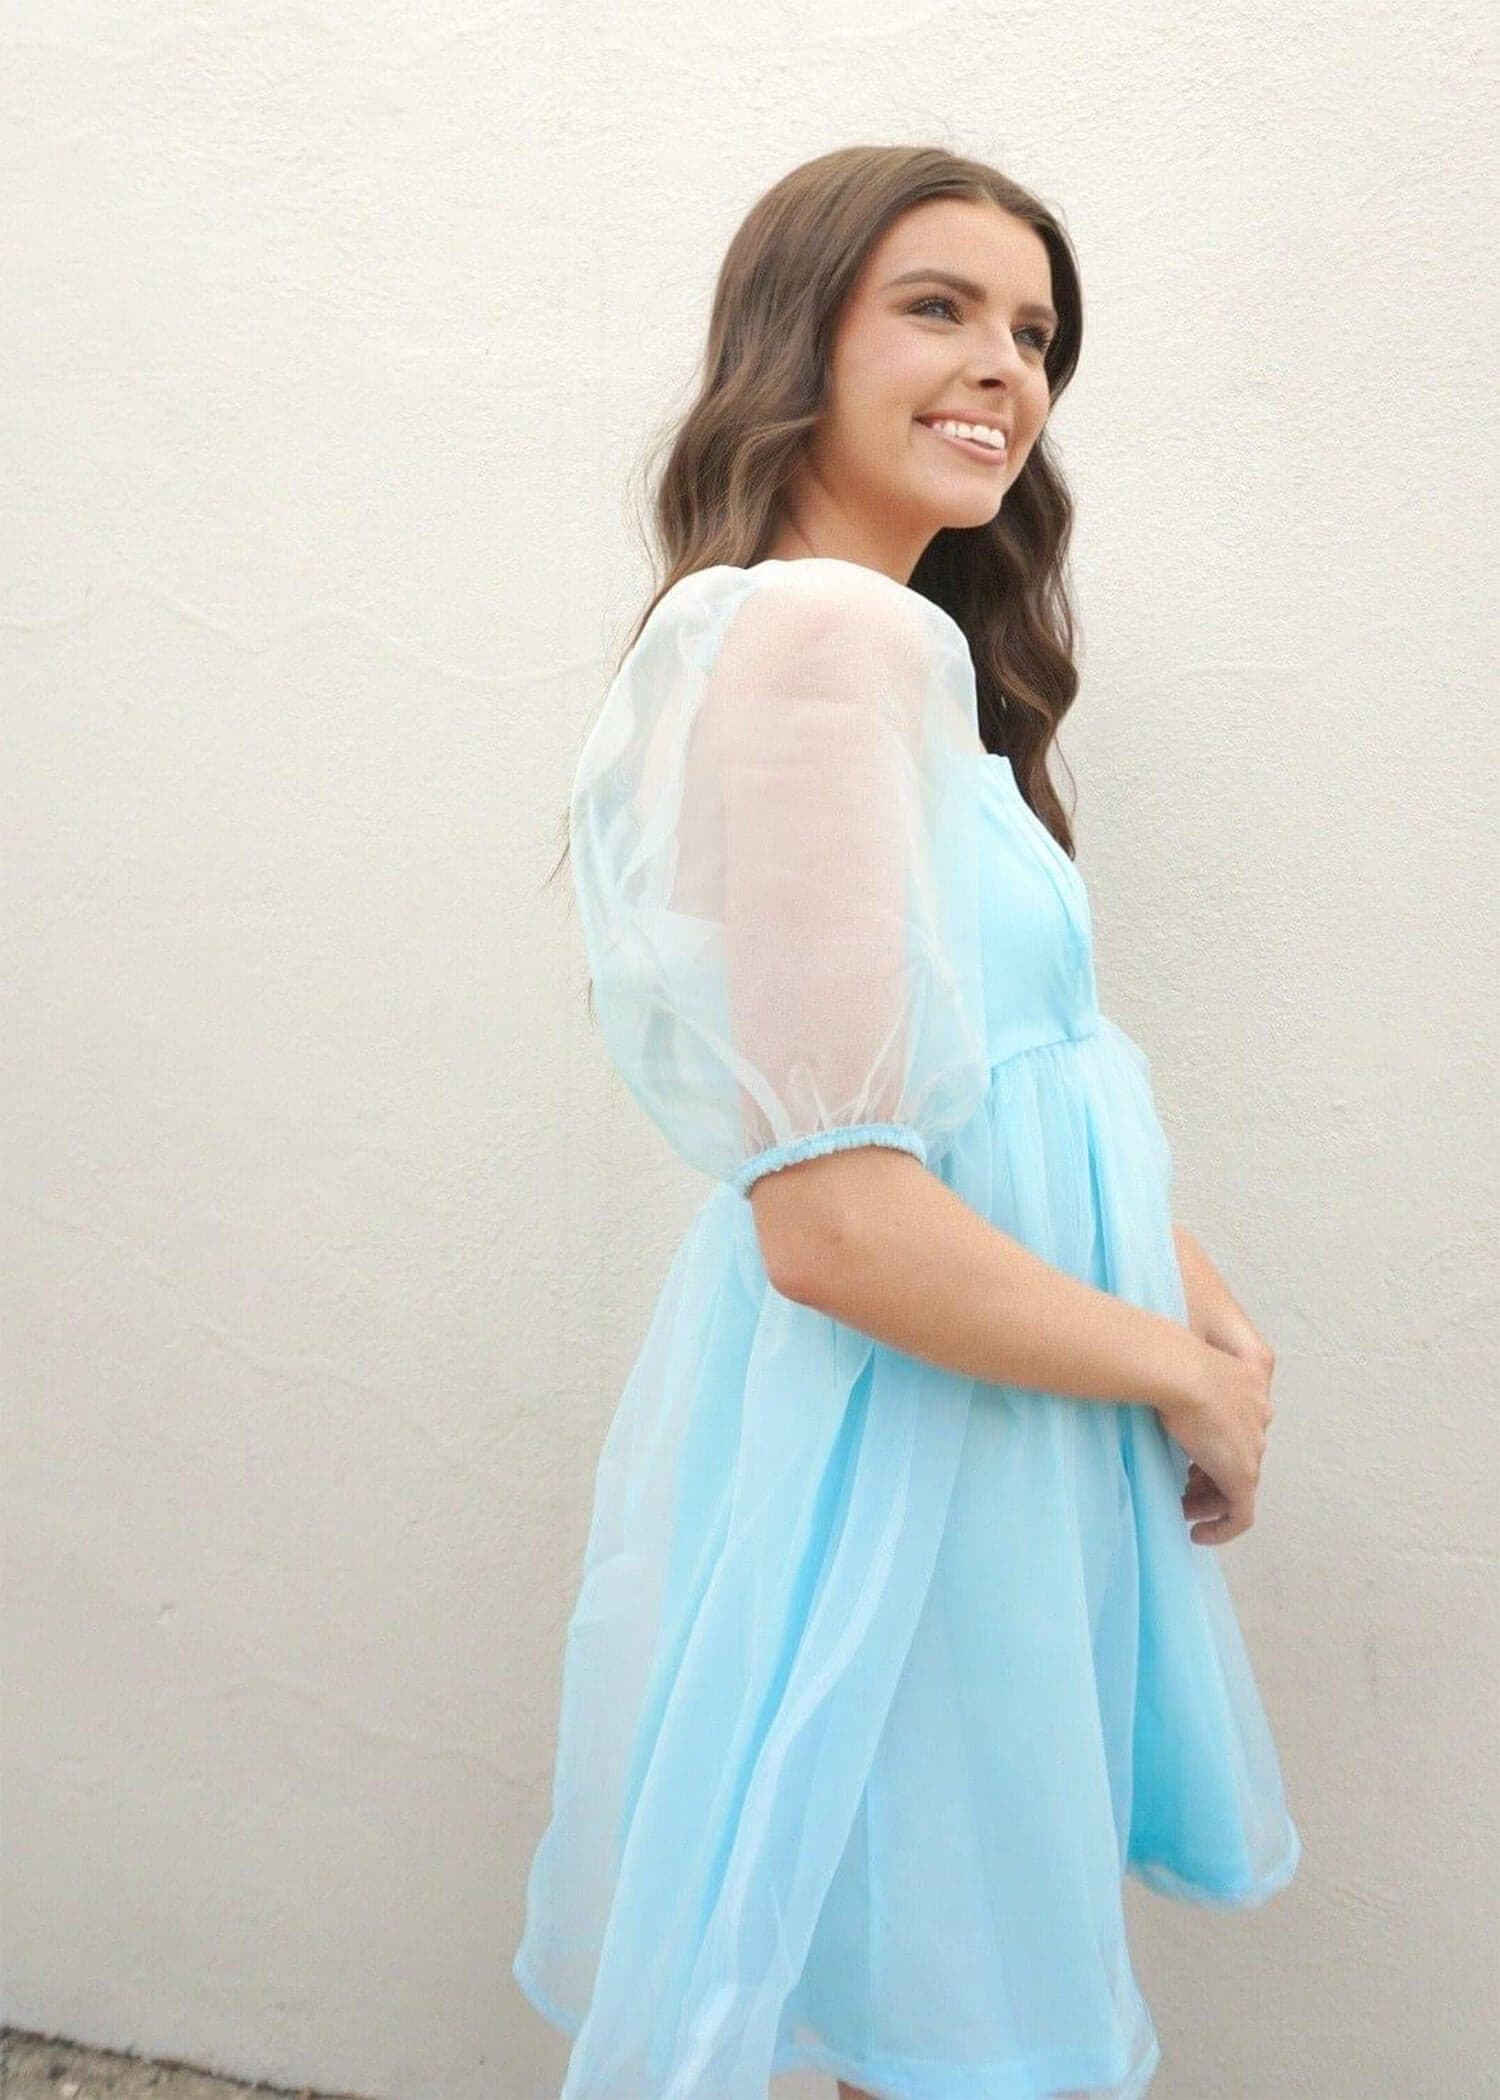 Chasin' Dreams Dress - Baby Blue Dress MerciGrace Boutique.